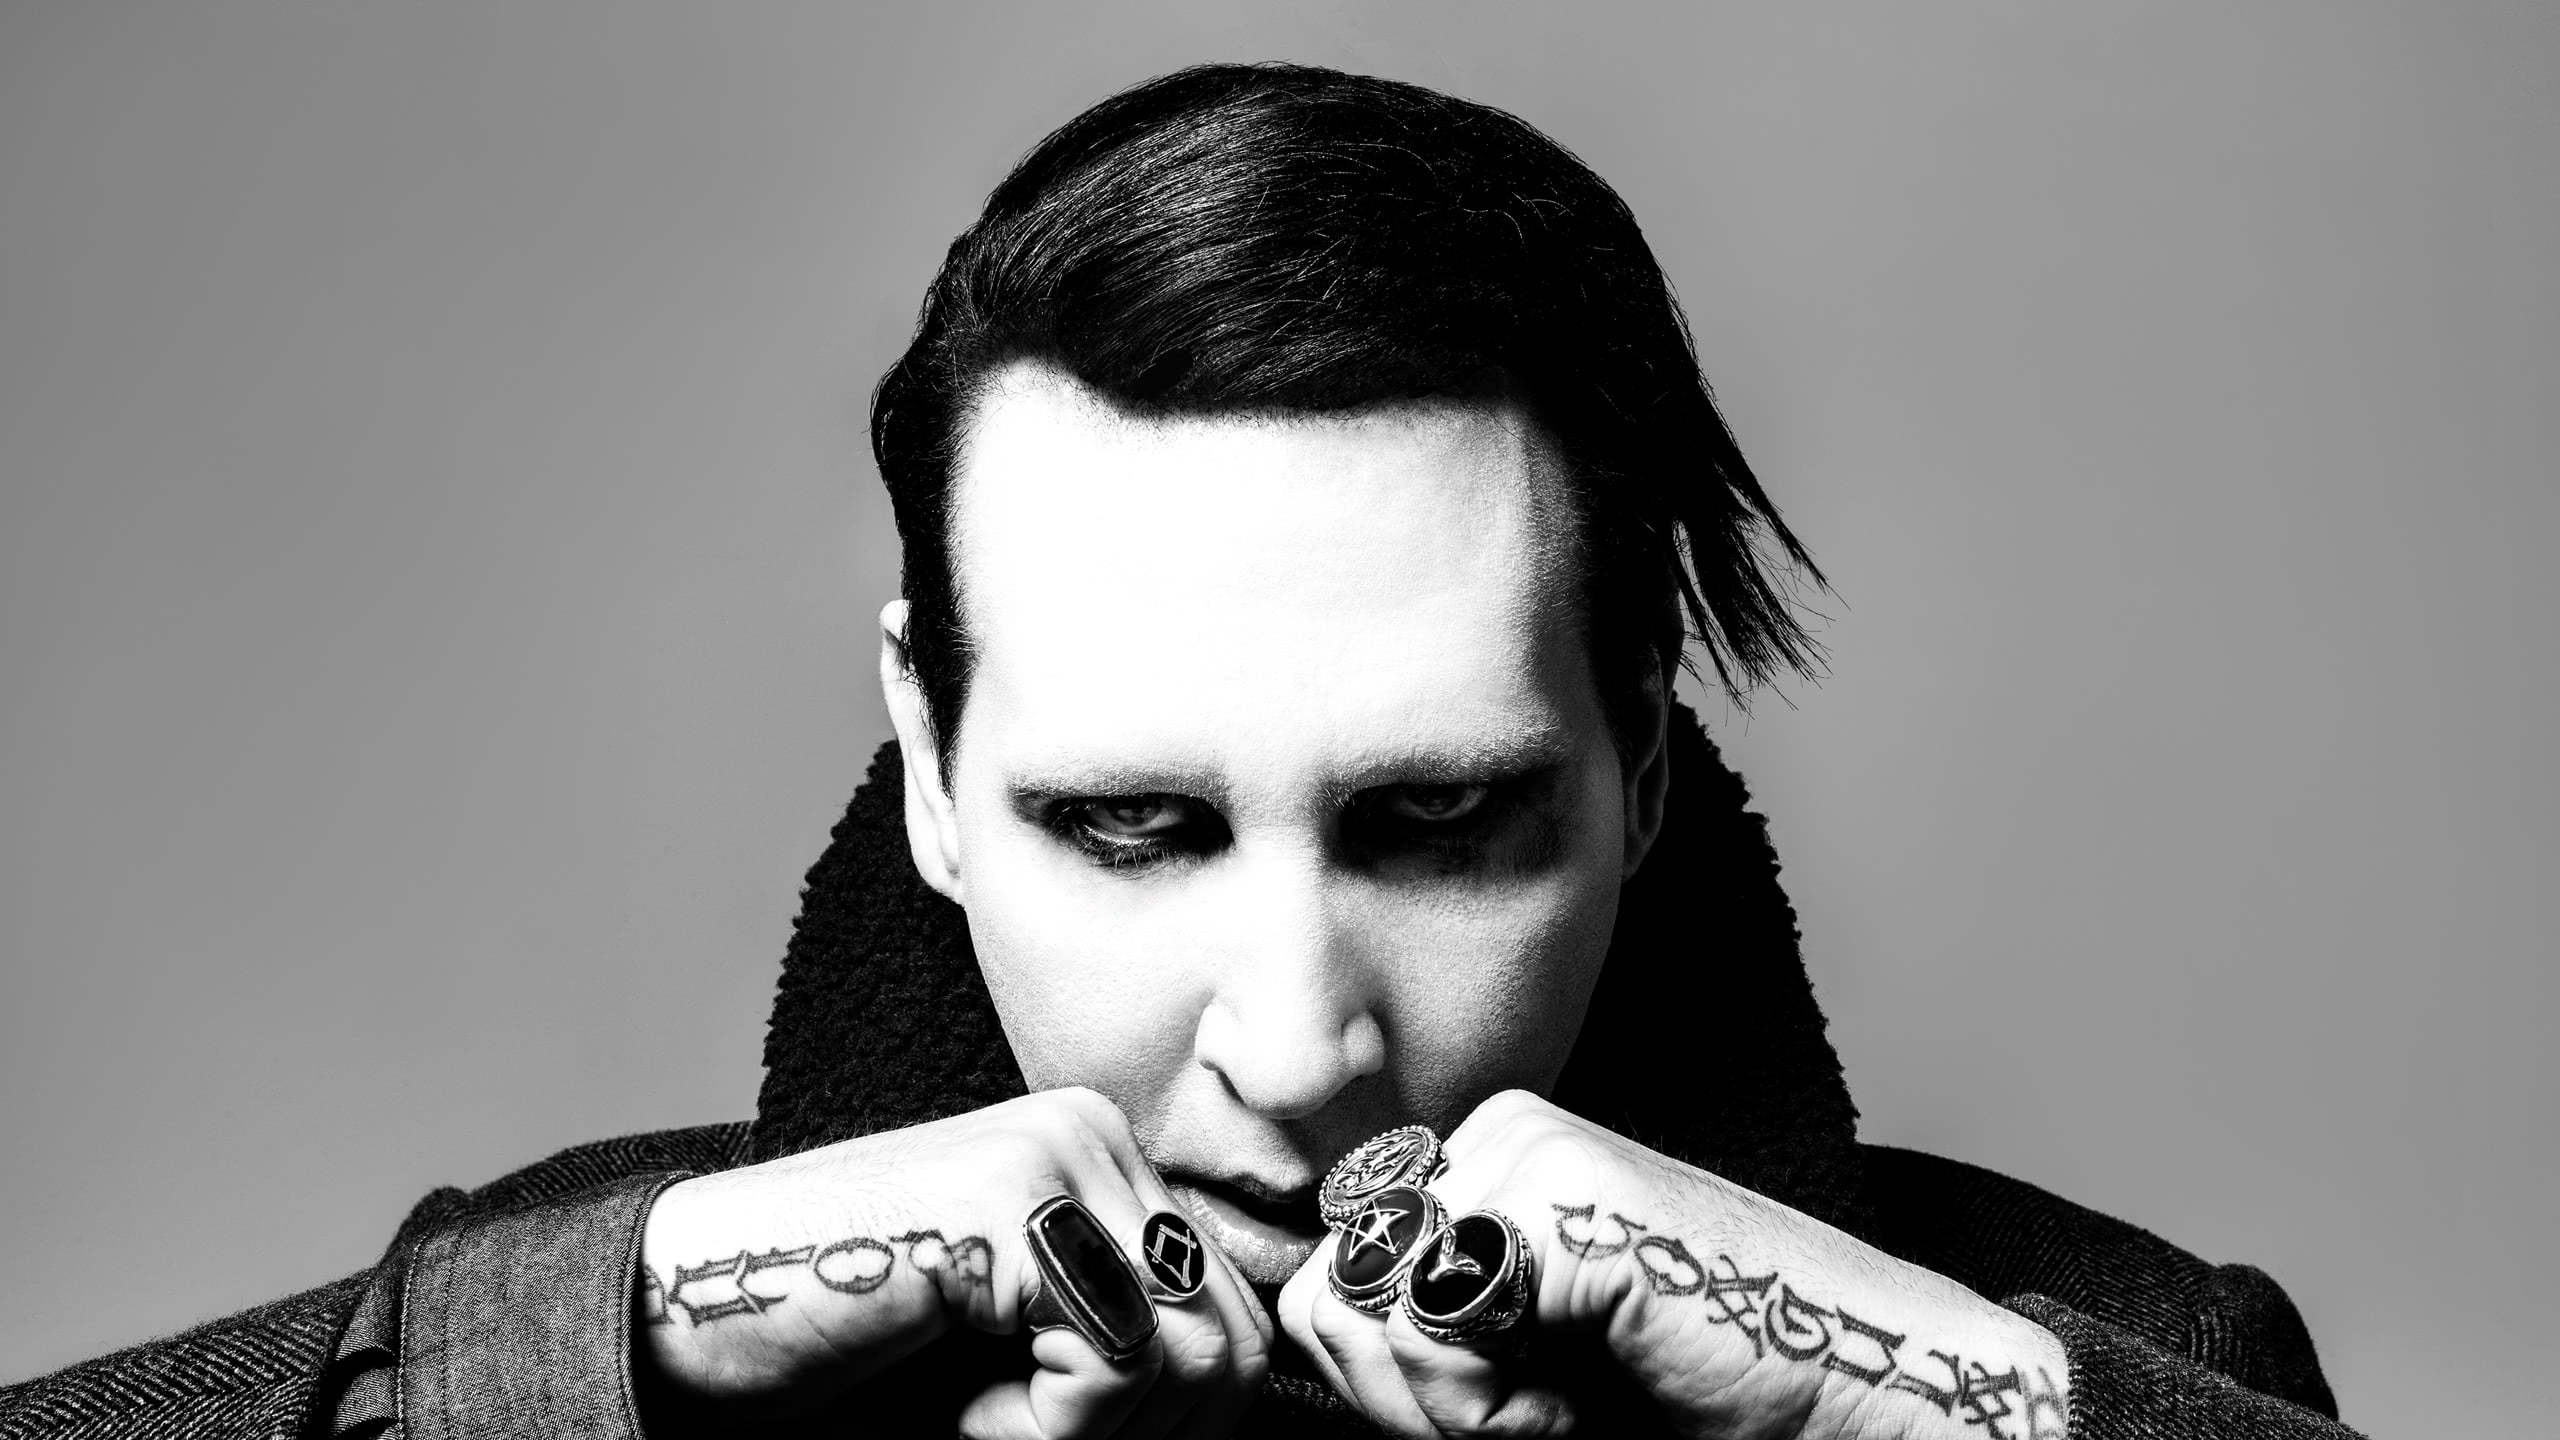 Marilyn Manson portrait wallpaper, WQHD resolution, Striking visuals, Artistic imagery, 2560x1440 HD Desktop